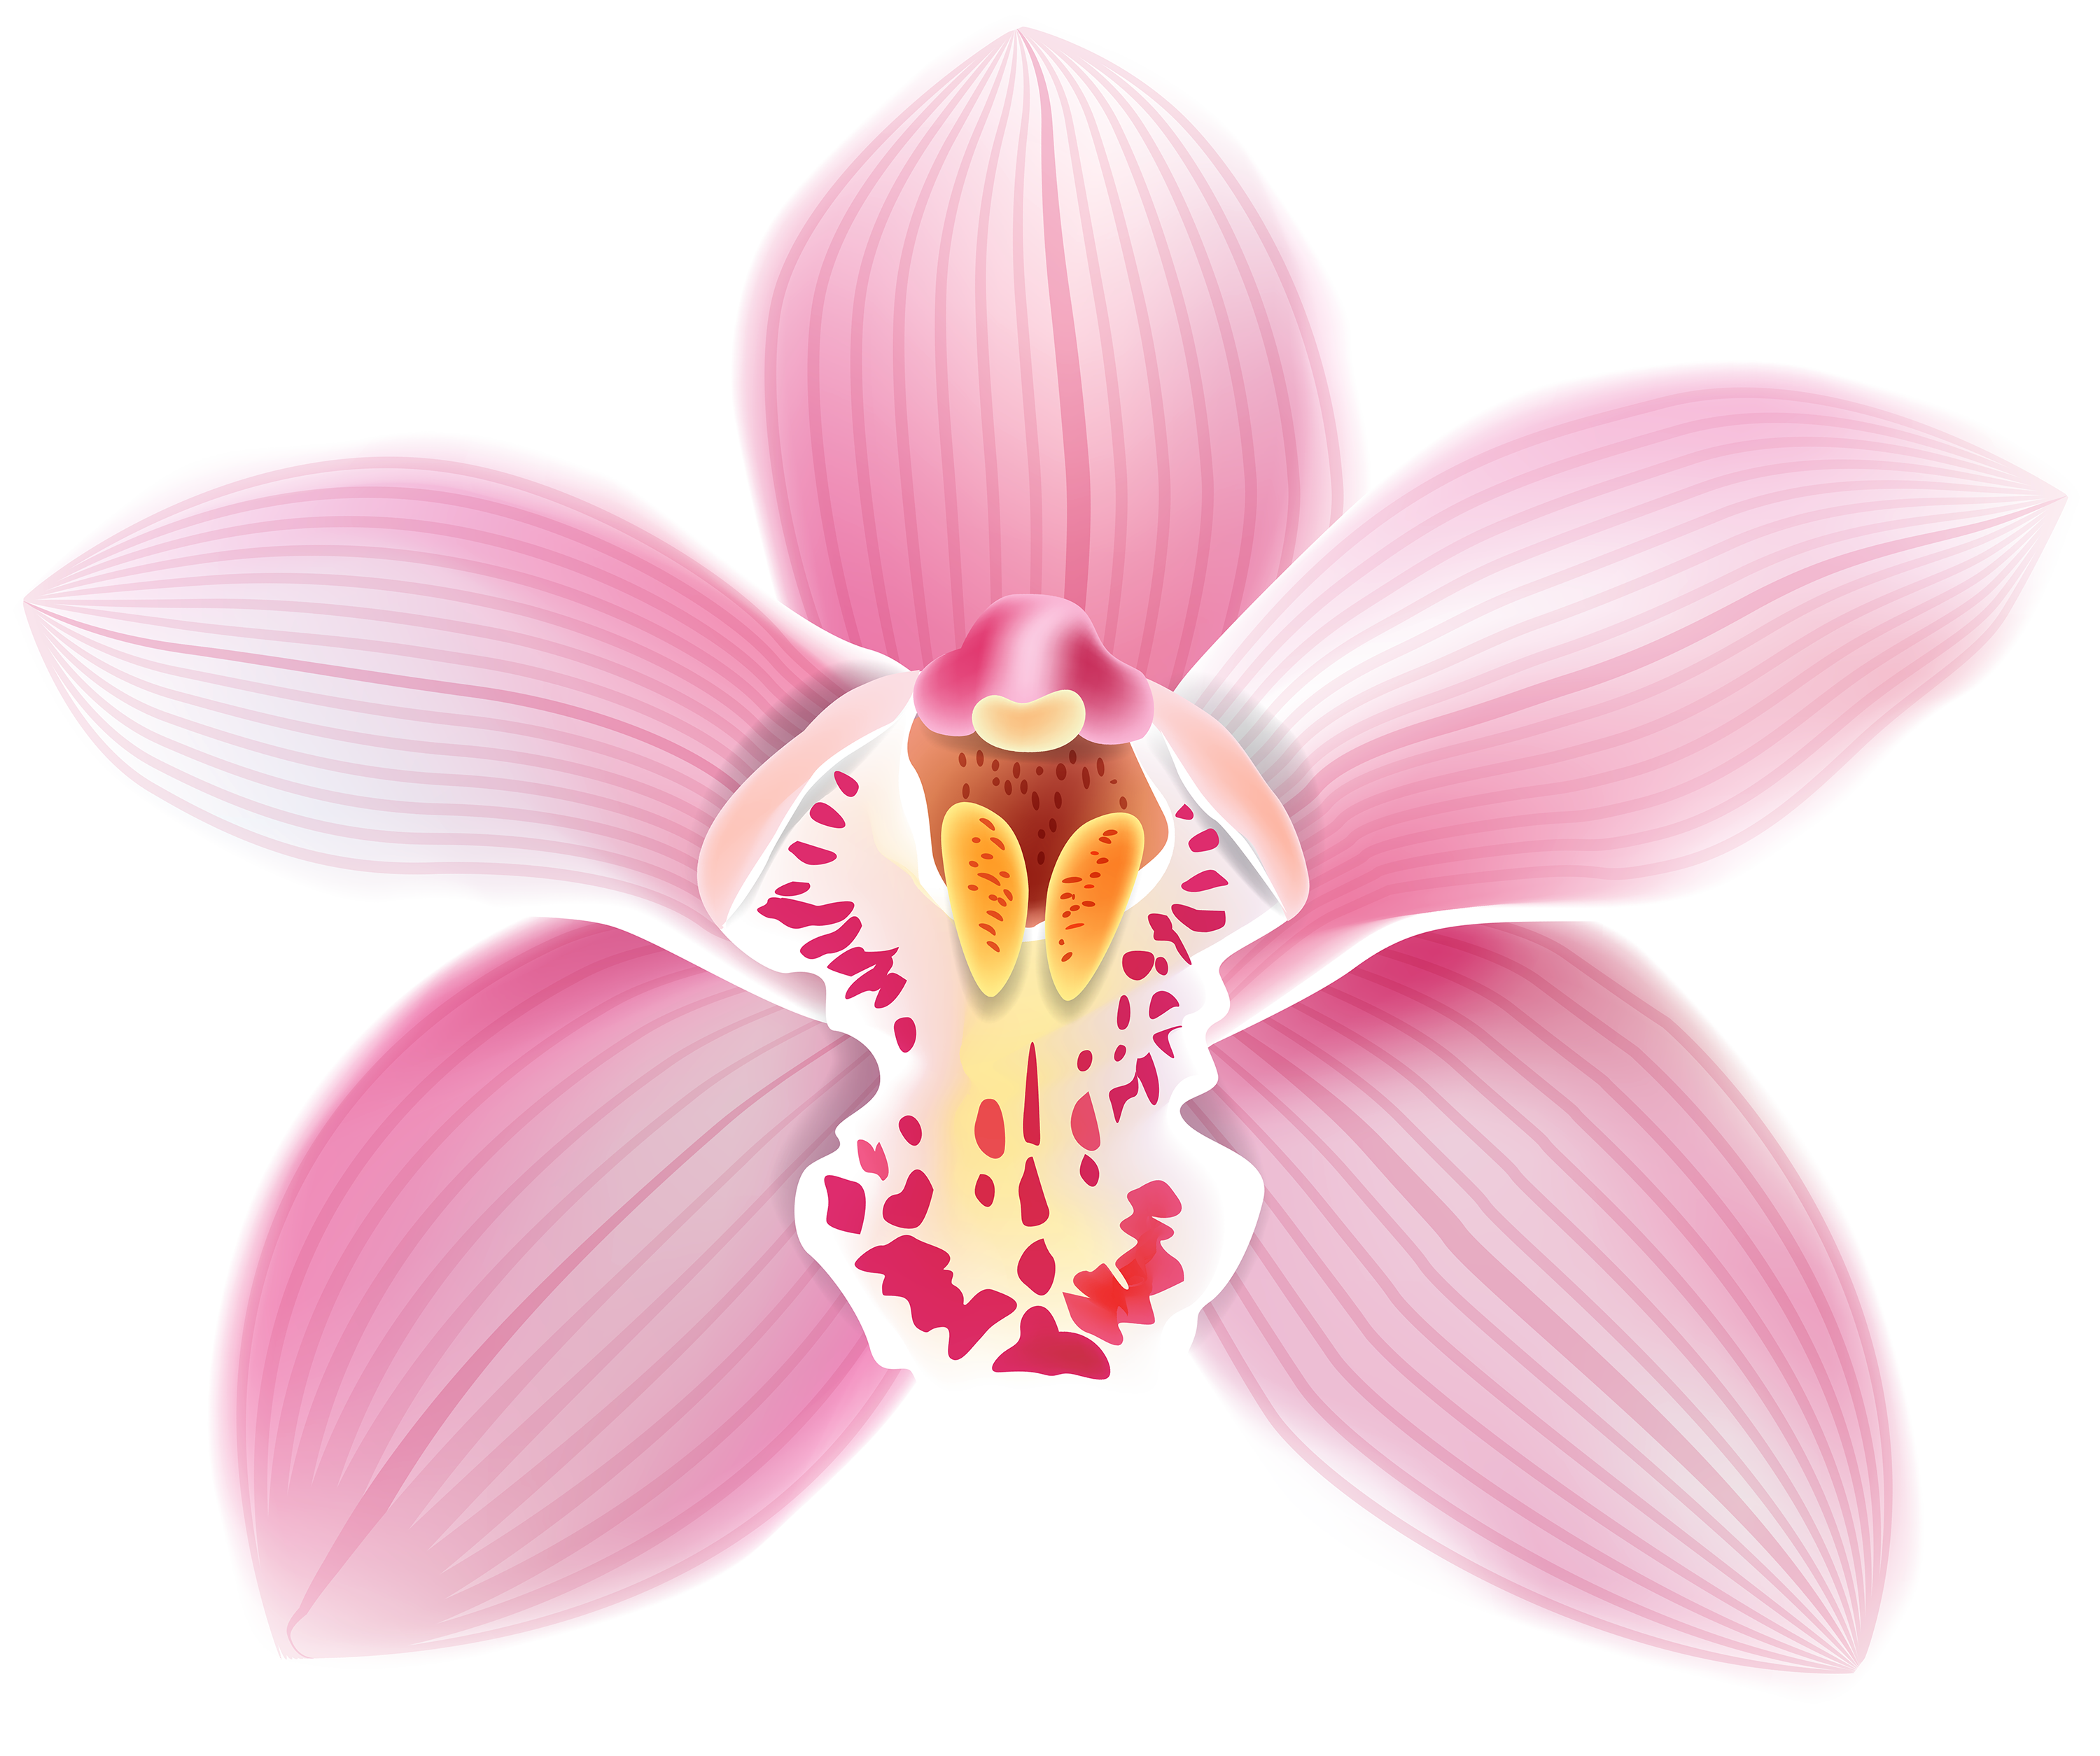 lily clipart fuschia flower